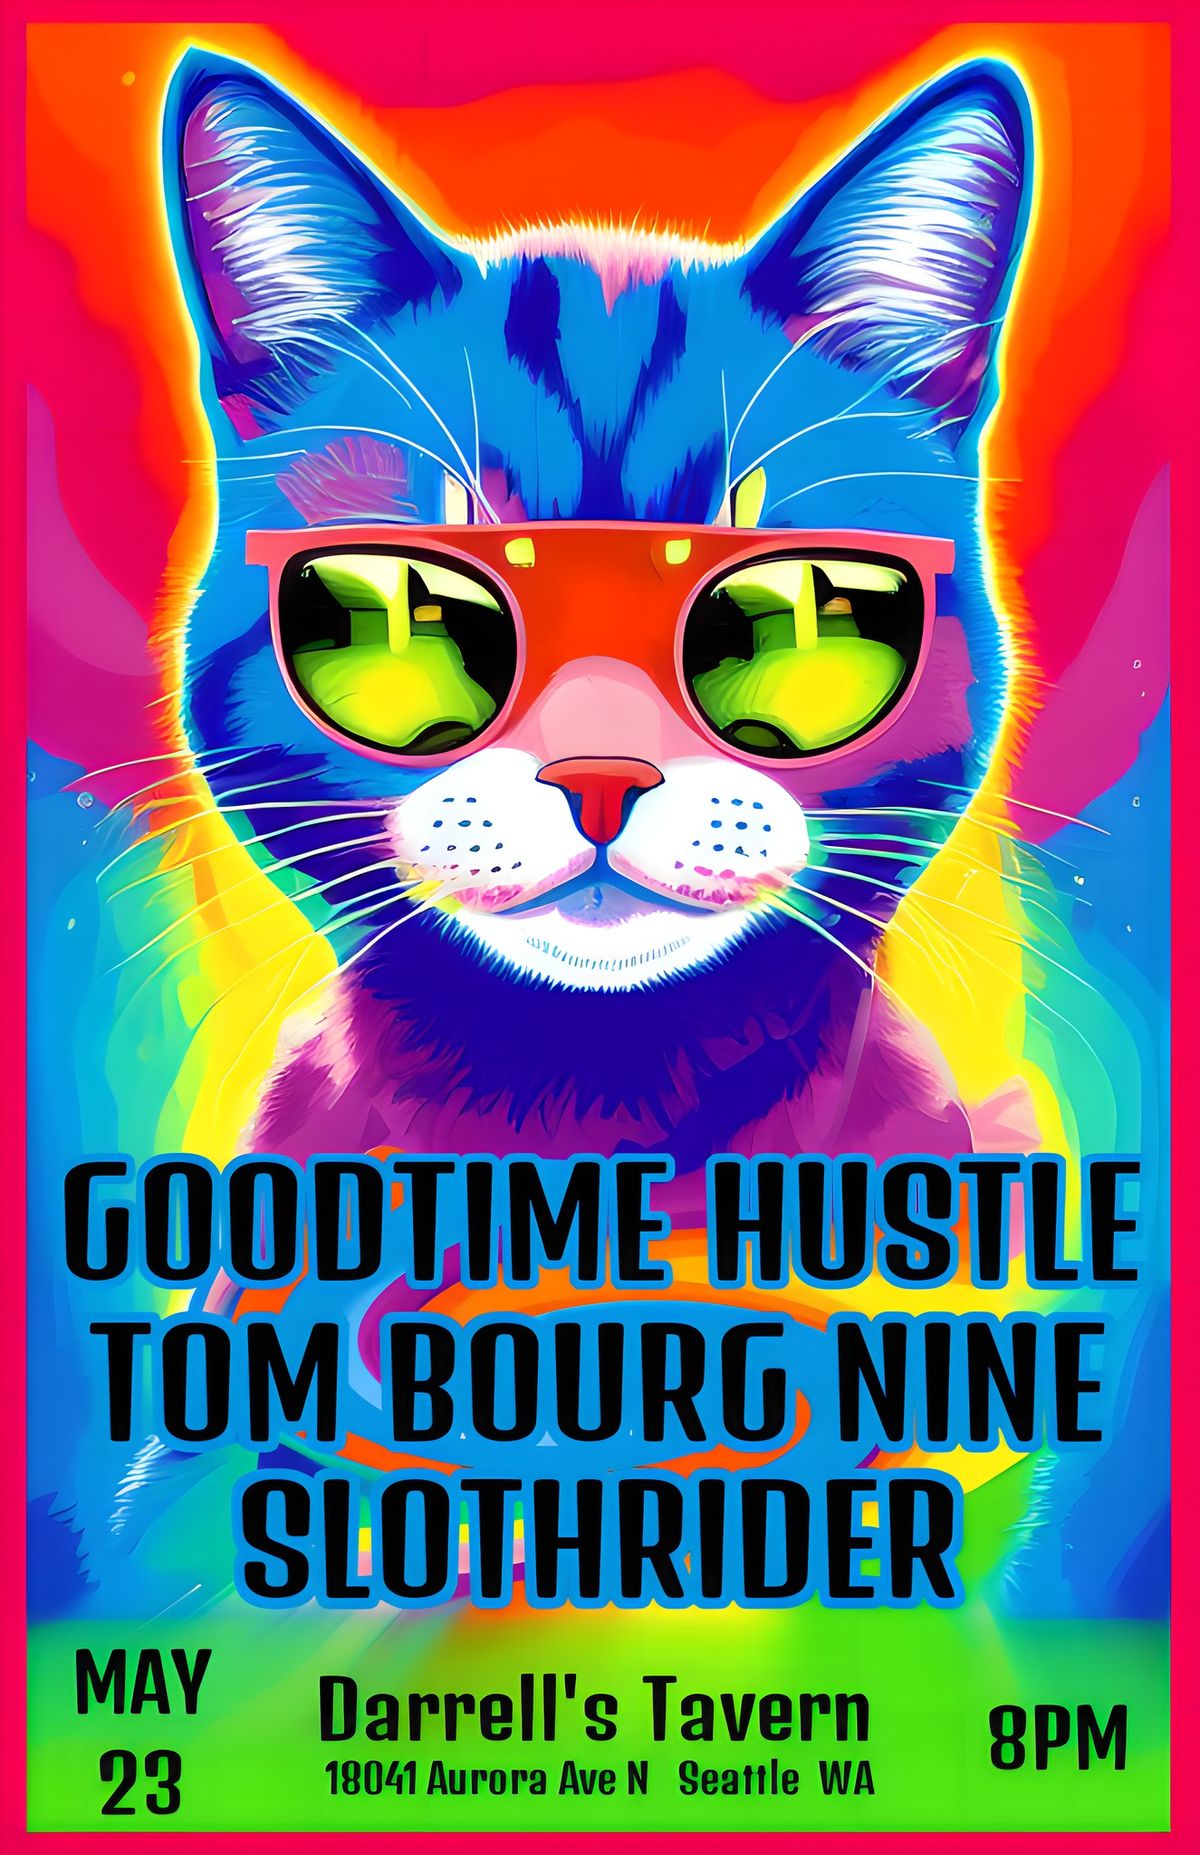 Goodtime Hustle, Tom Bourg Nine, Slothrider